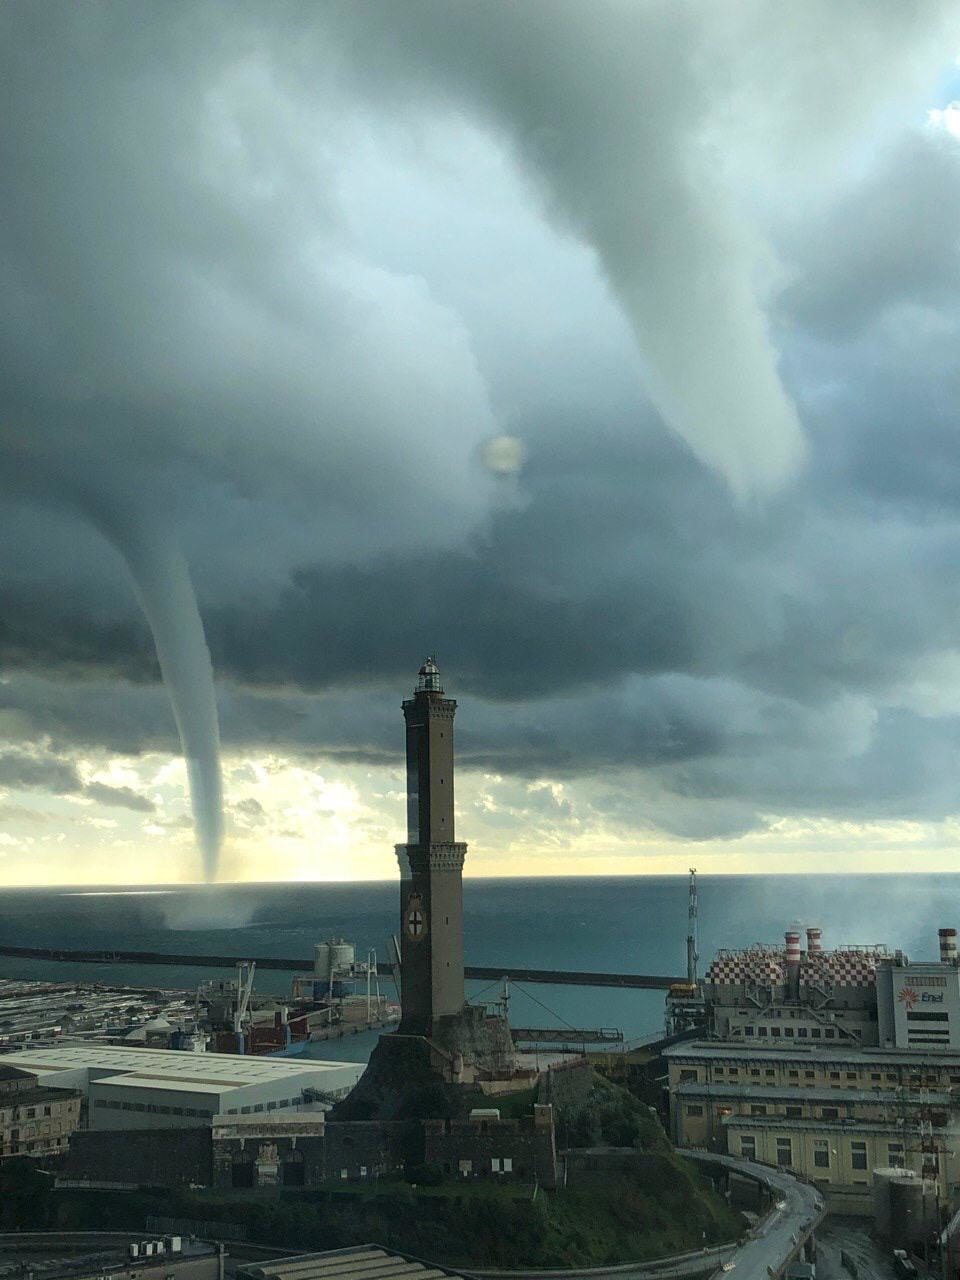 Double tornado today in Genoa, Italy